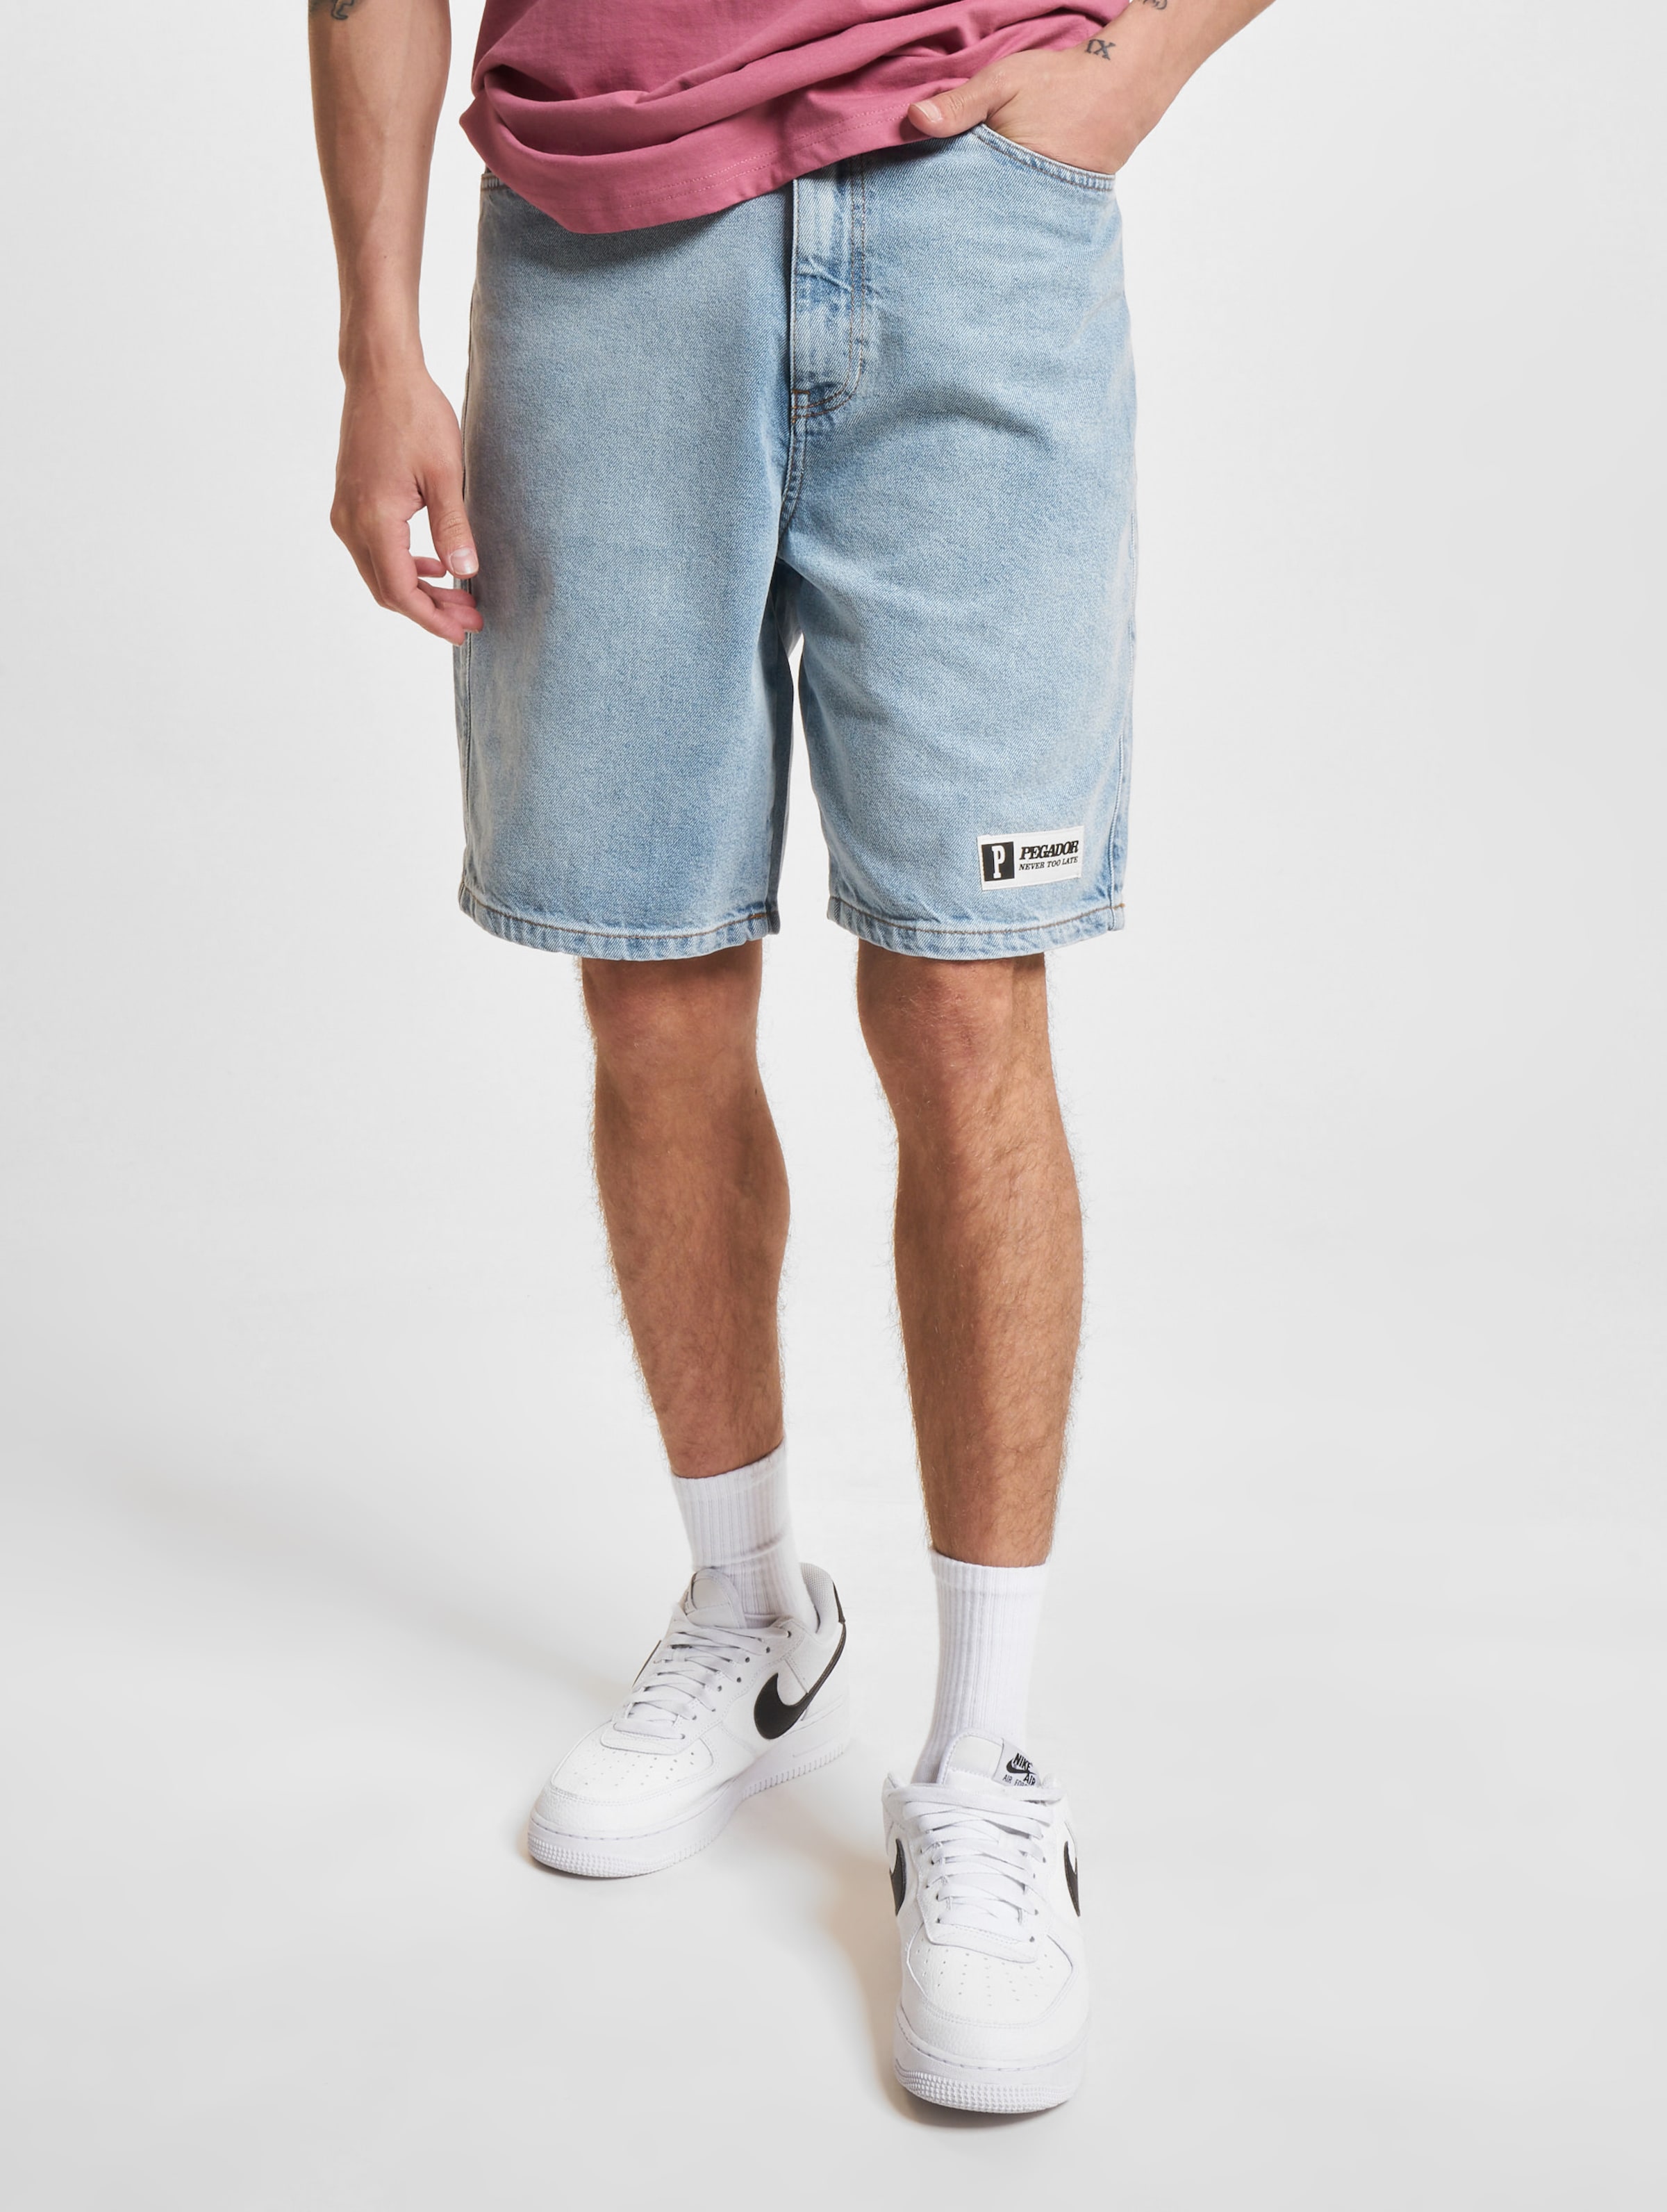 PEGADOR Moores Jeans Shorts Männer,Unisex op kleur blauw, Maat 36